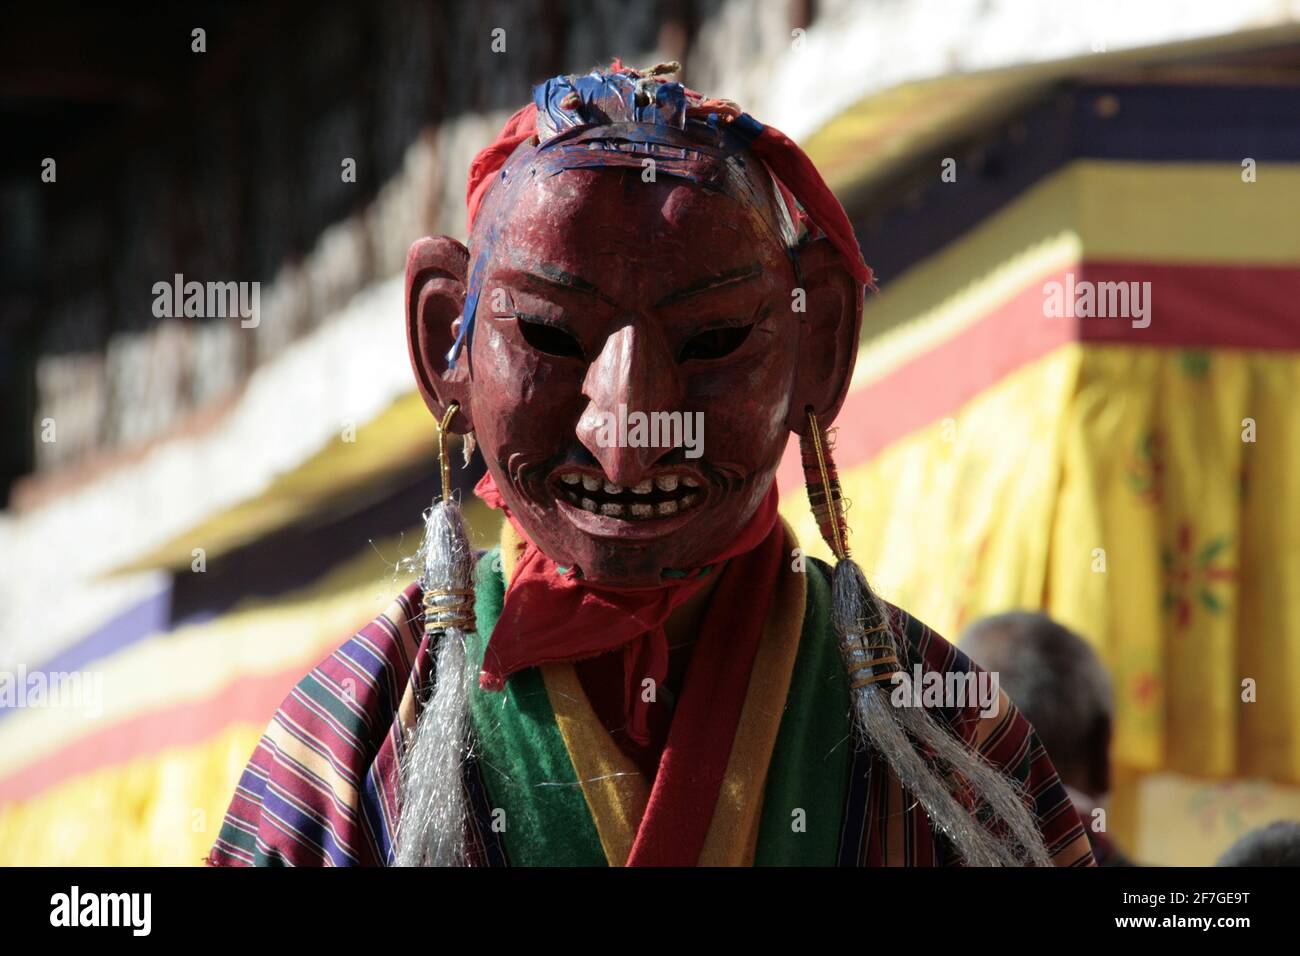 Dance Dancers Masquerade Ball Parade Monastery Performance Women Dancing With Masks Traditional Dance Of Creation Kingdom Of Bhutan Himalayas Stock Photo